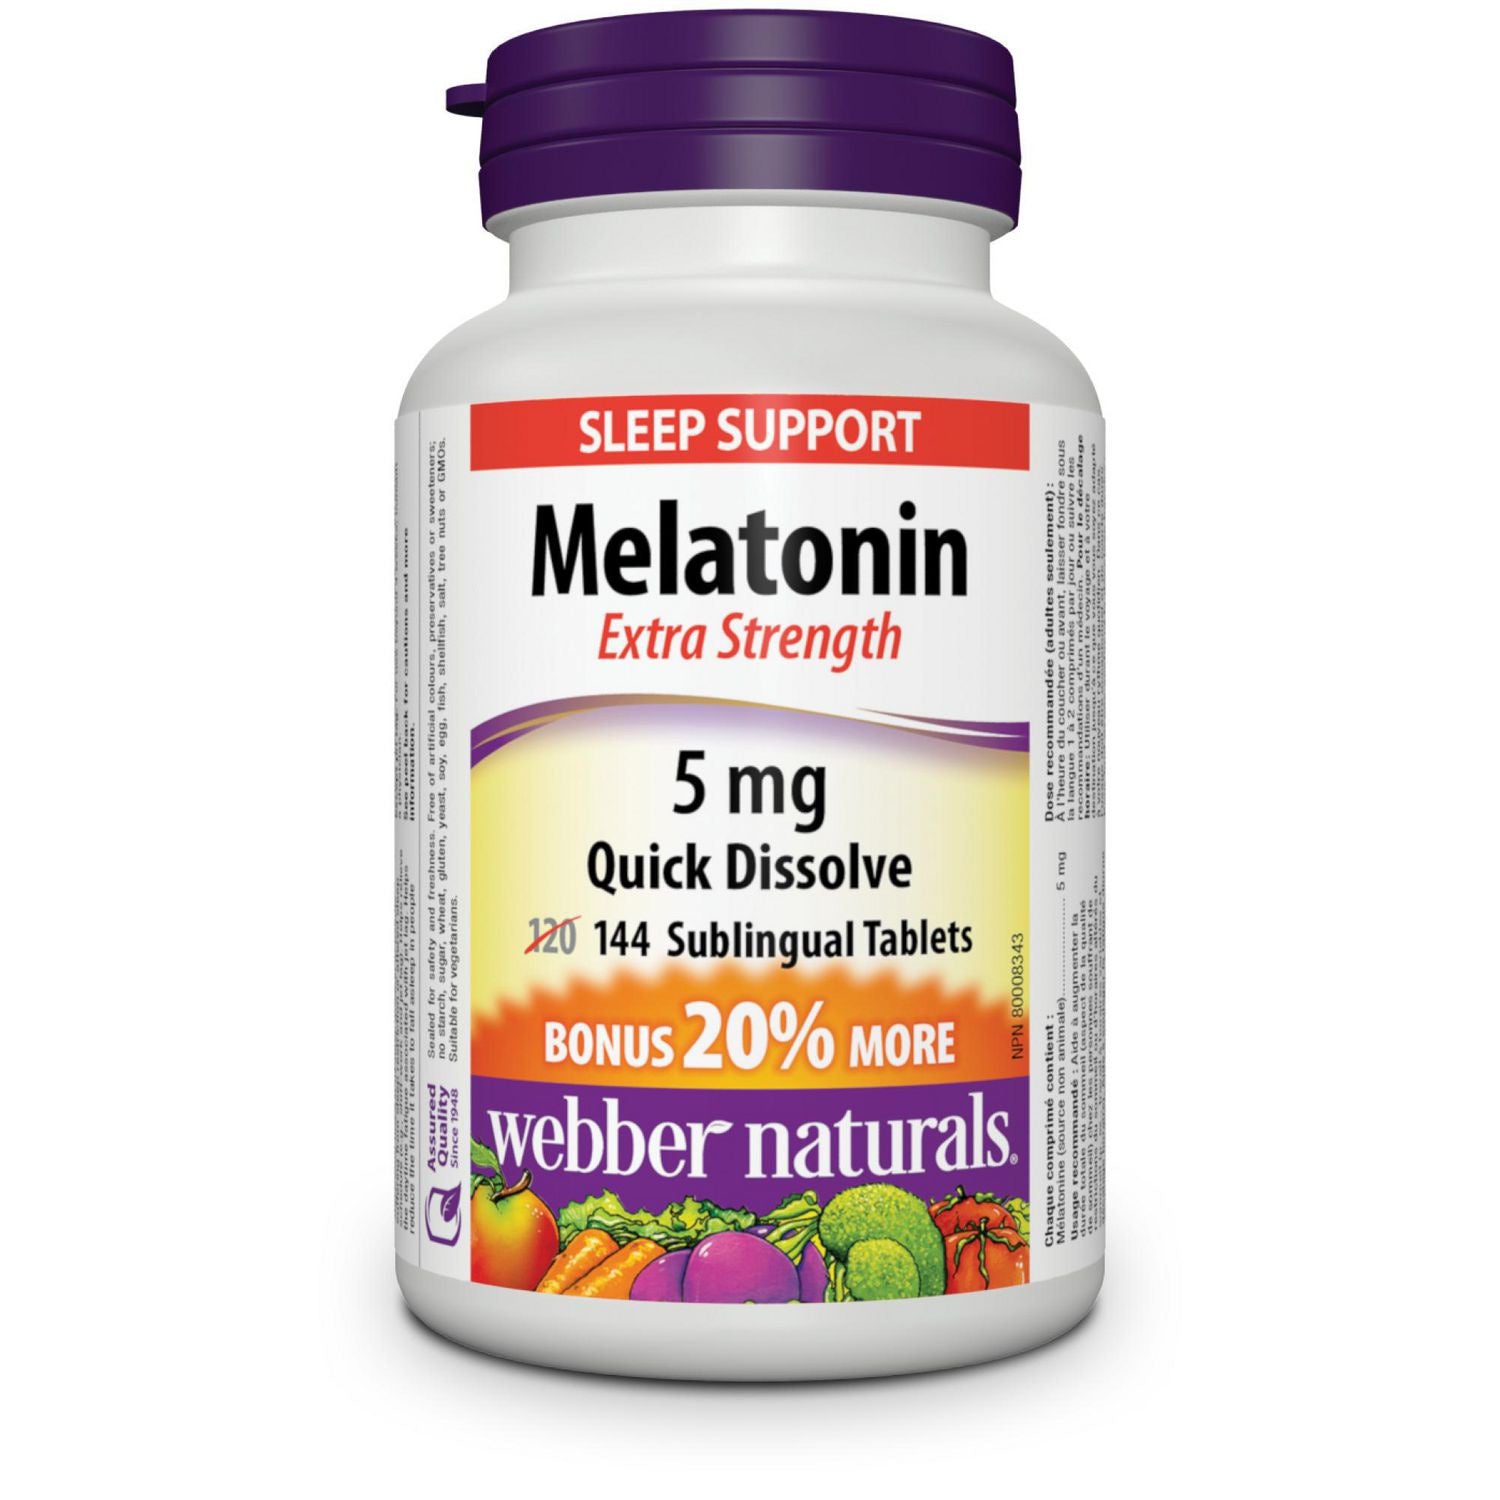 Webber Naturals® Melatonin Extra Strength Quick Dissolve, 5 mg